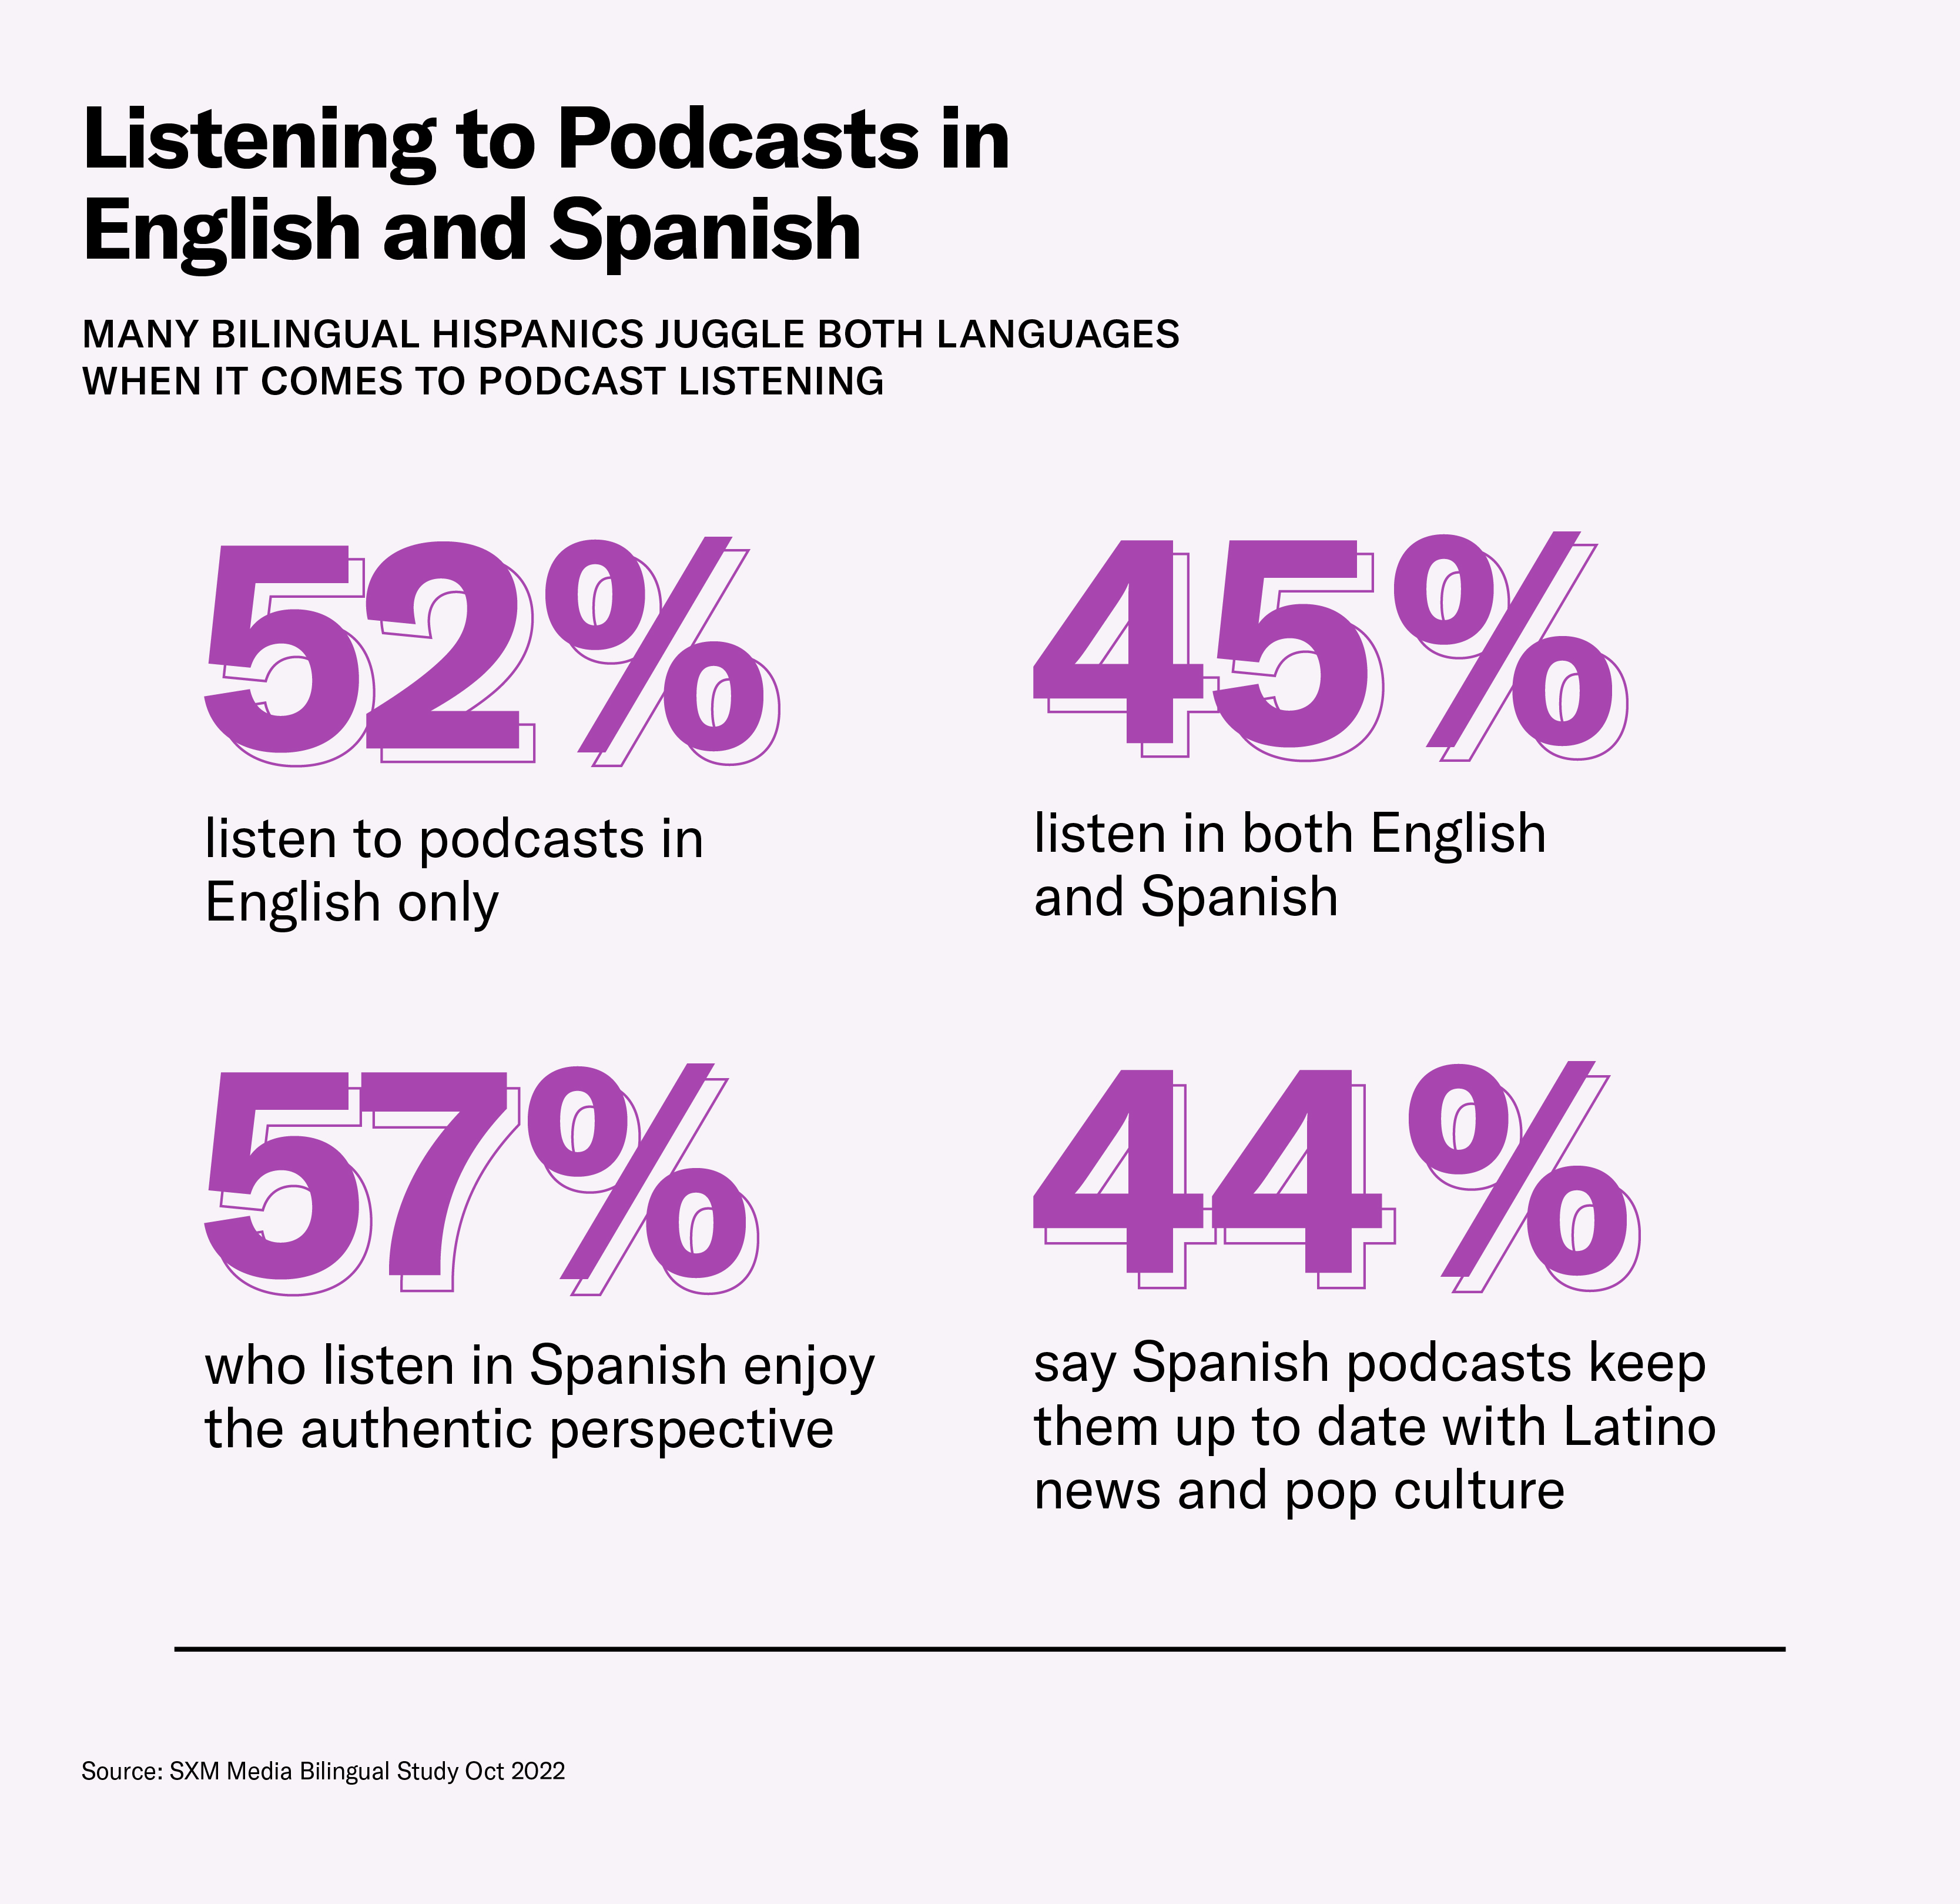 Bilingual Hispanics listen to podcasts in English and Spanish